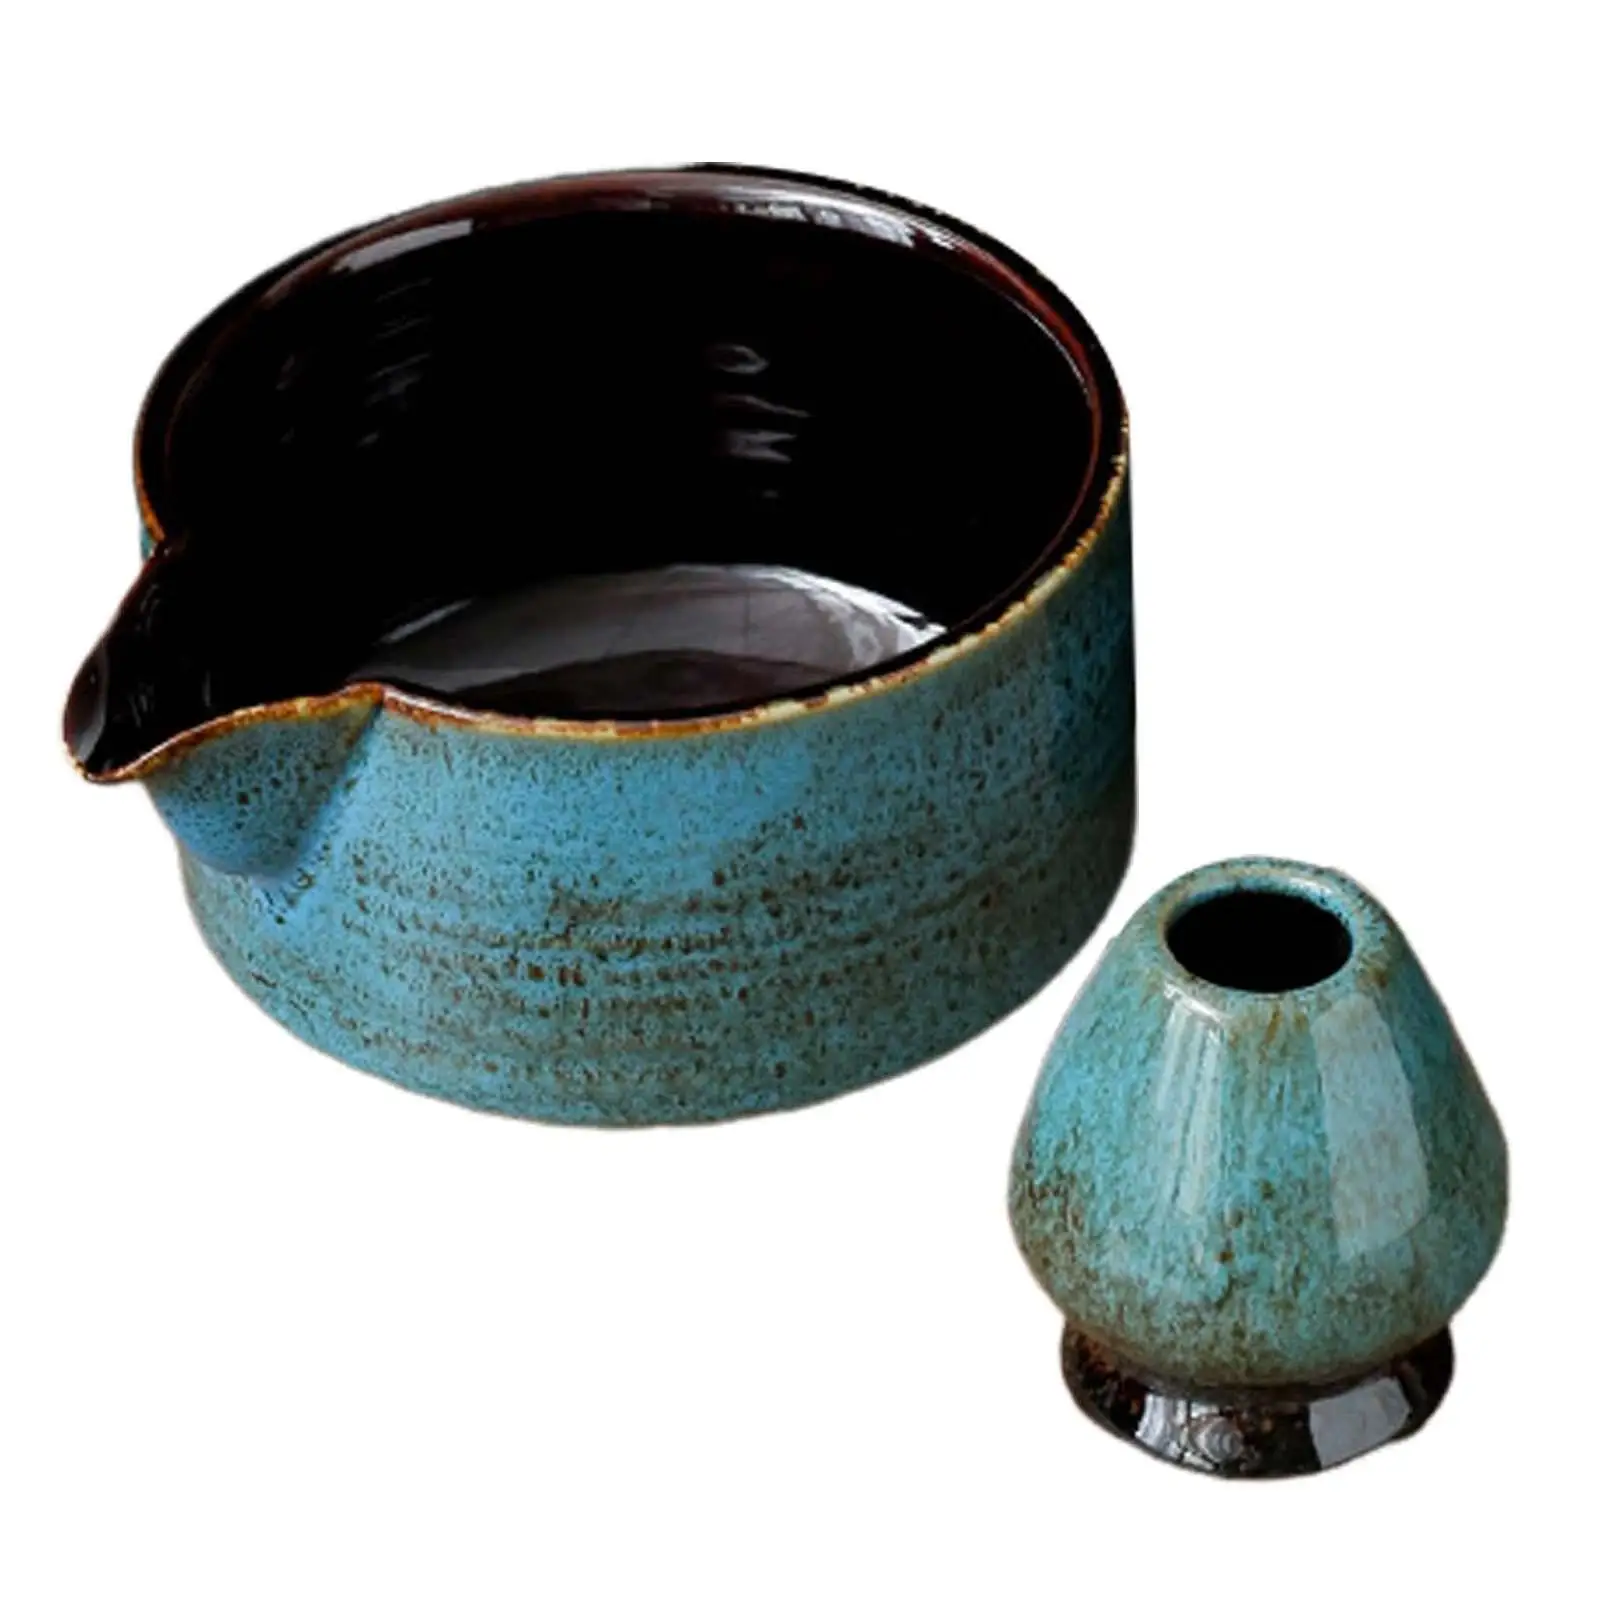 2Pcs Ceramic Matcha Bowl and Whisk Holder Whisk Tea Bowl for Beverage Japanese Matcha Preparation Matcha Family Beginner